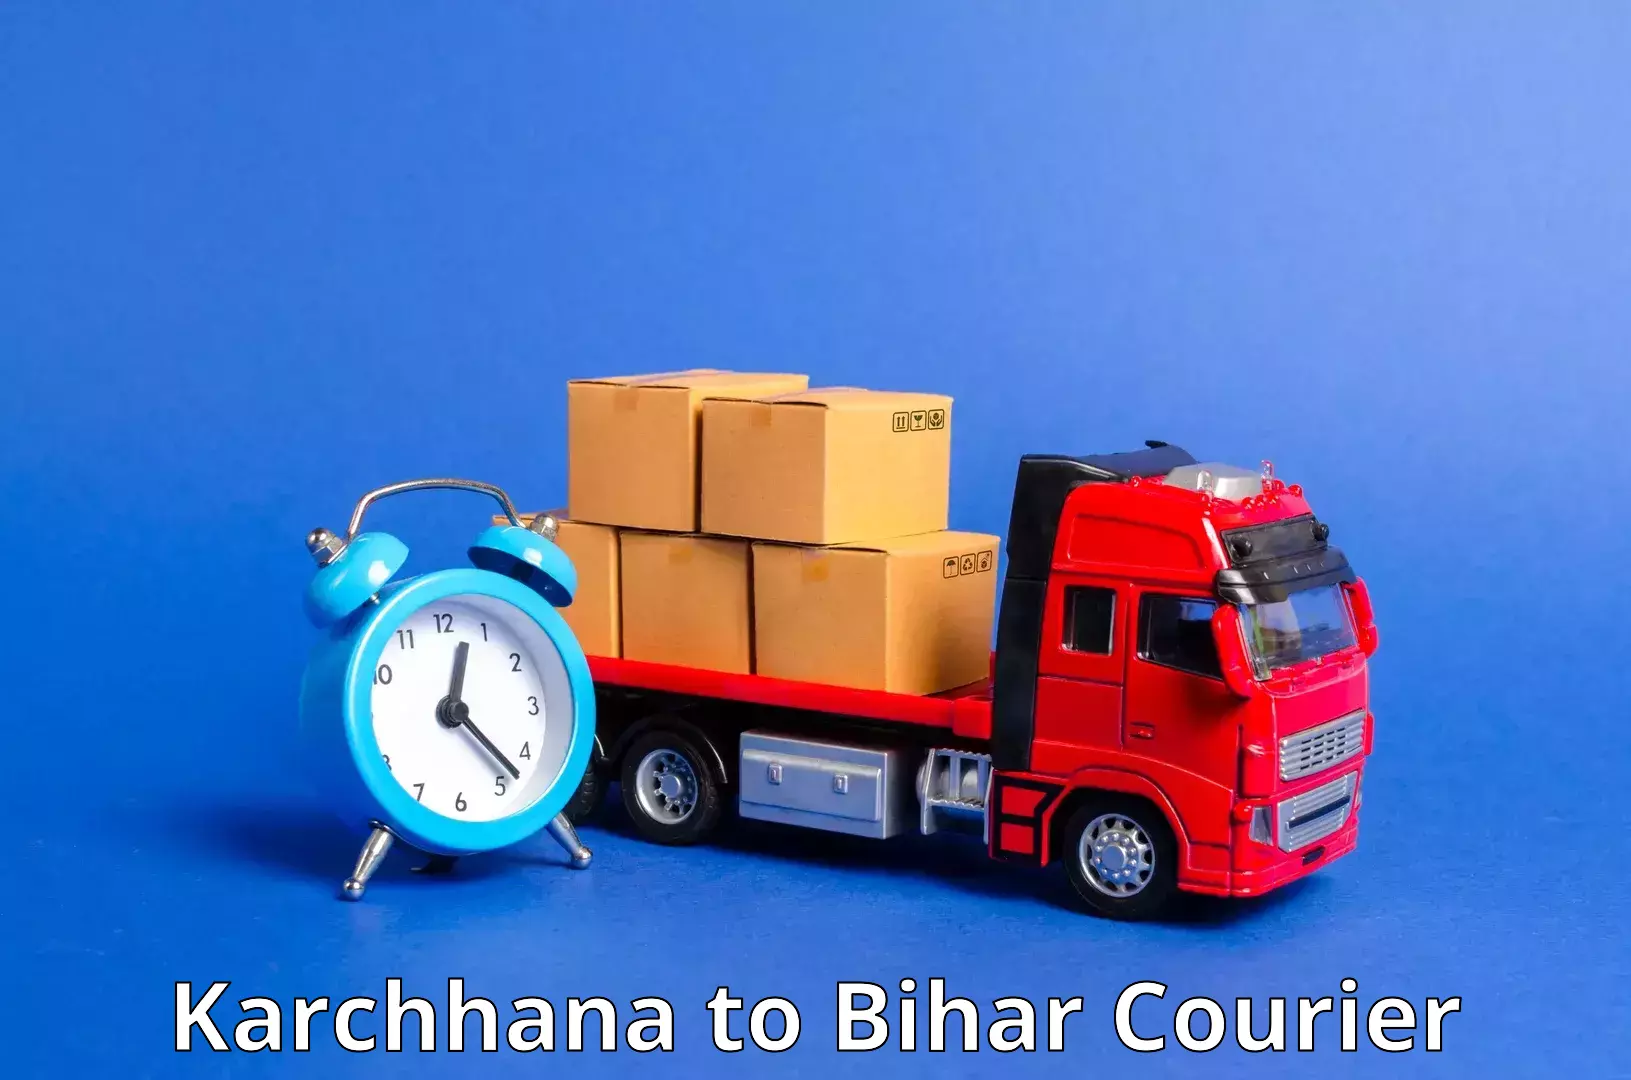 Professional courier handling Karchhana to Dhaka